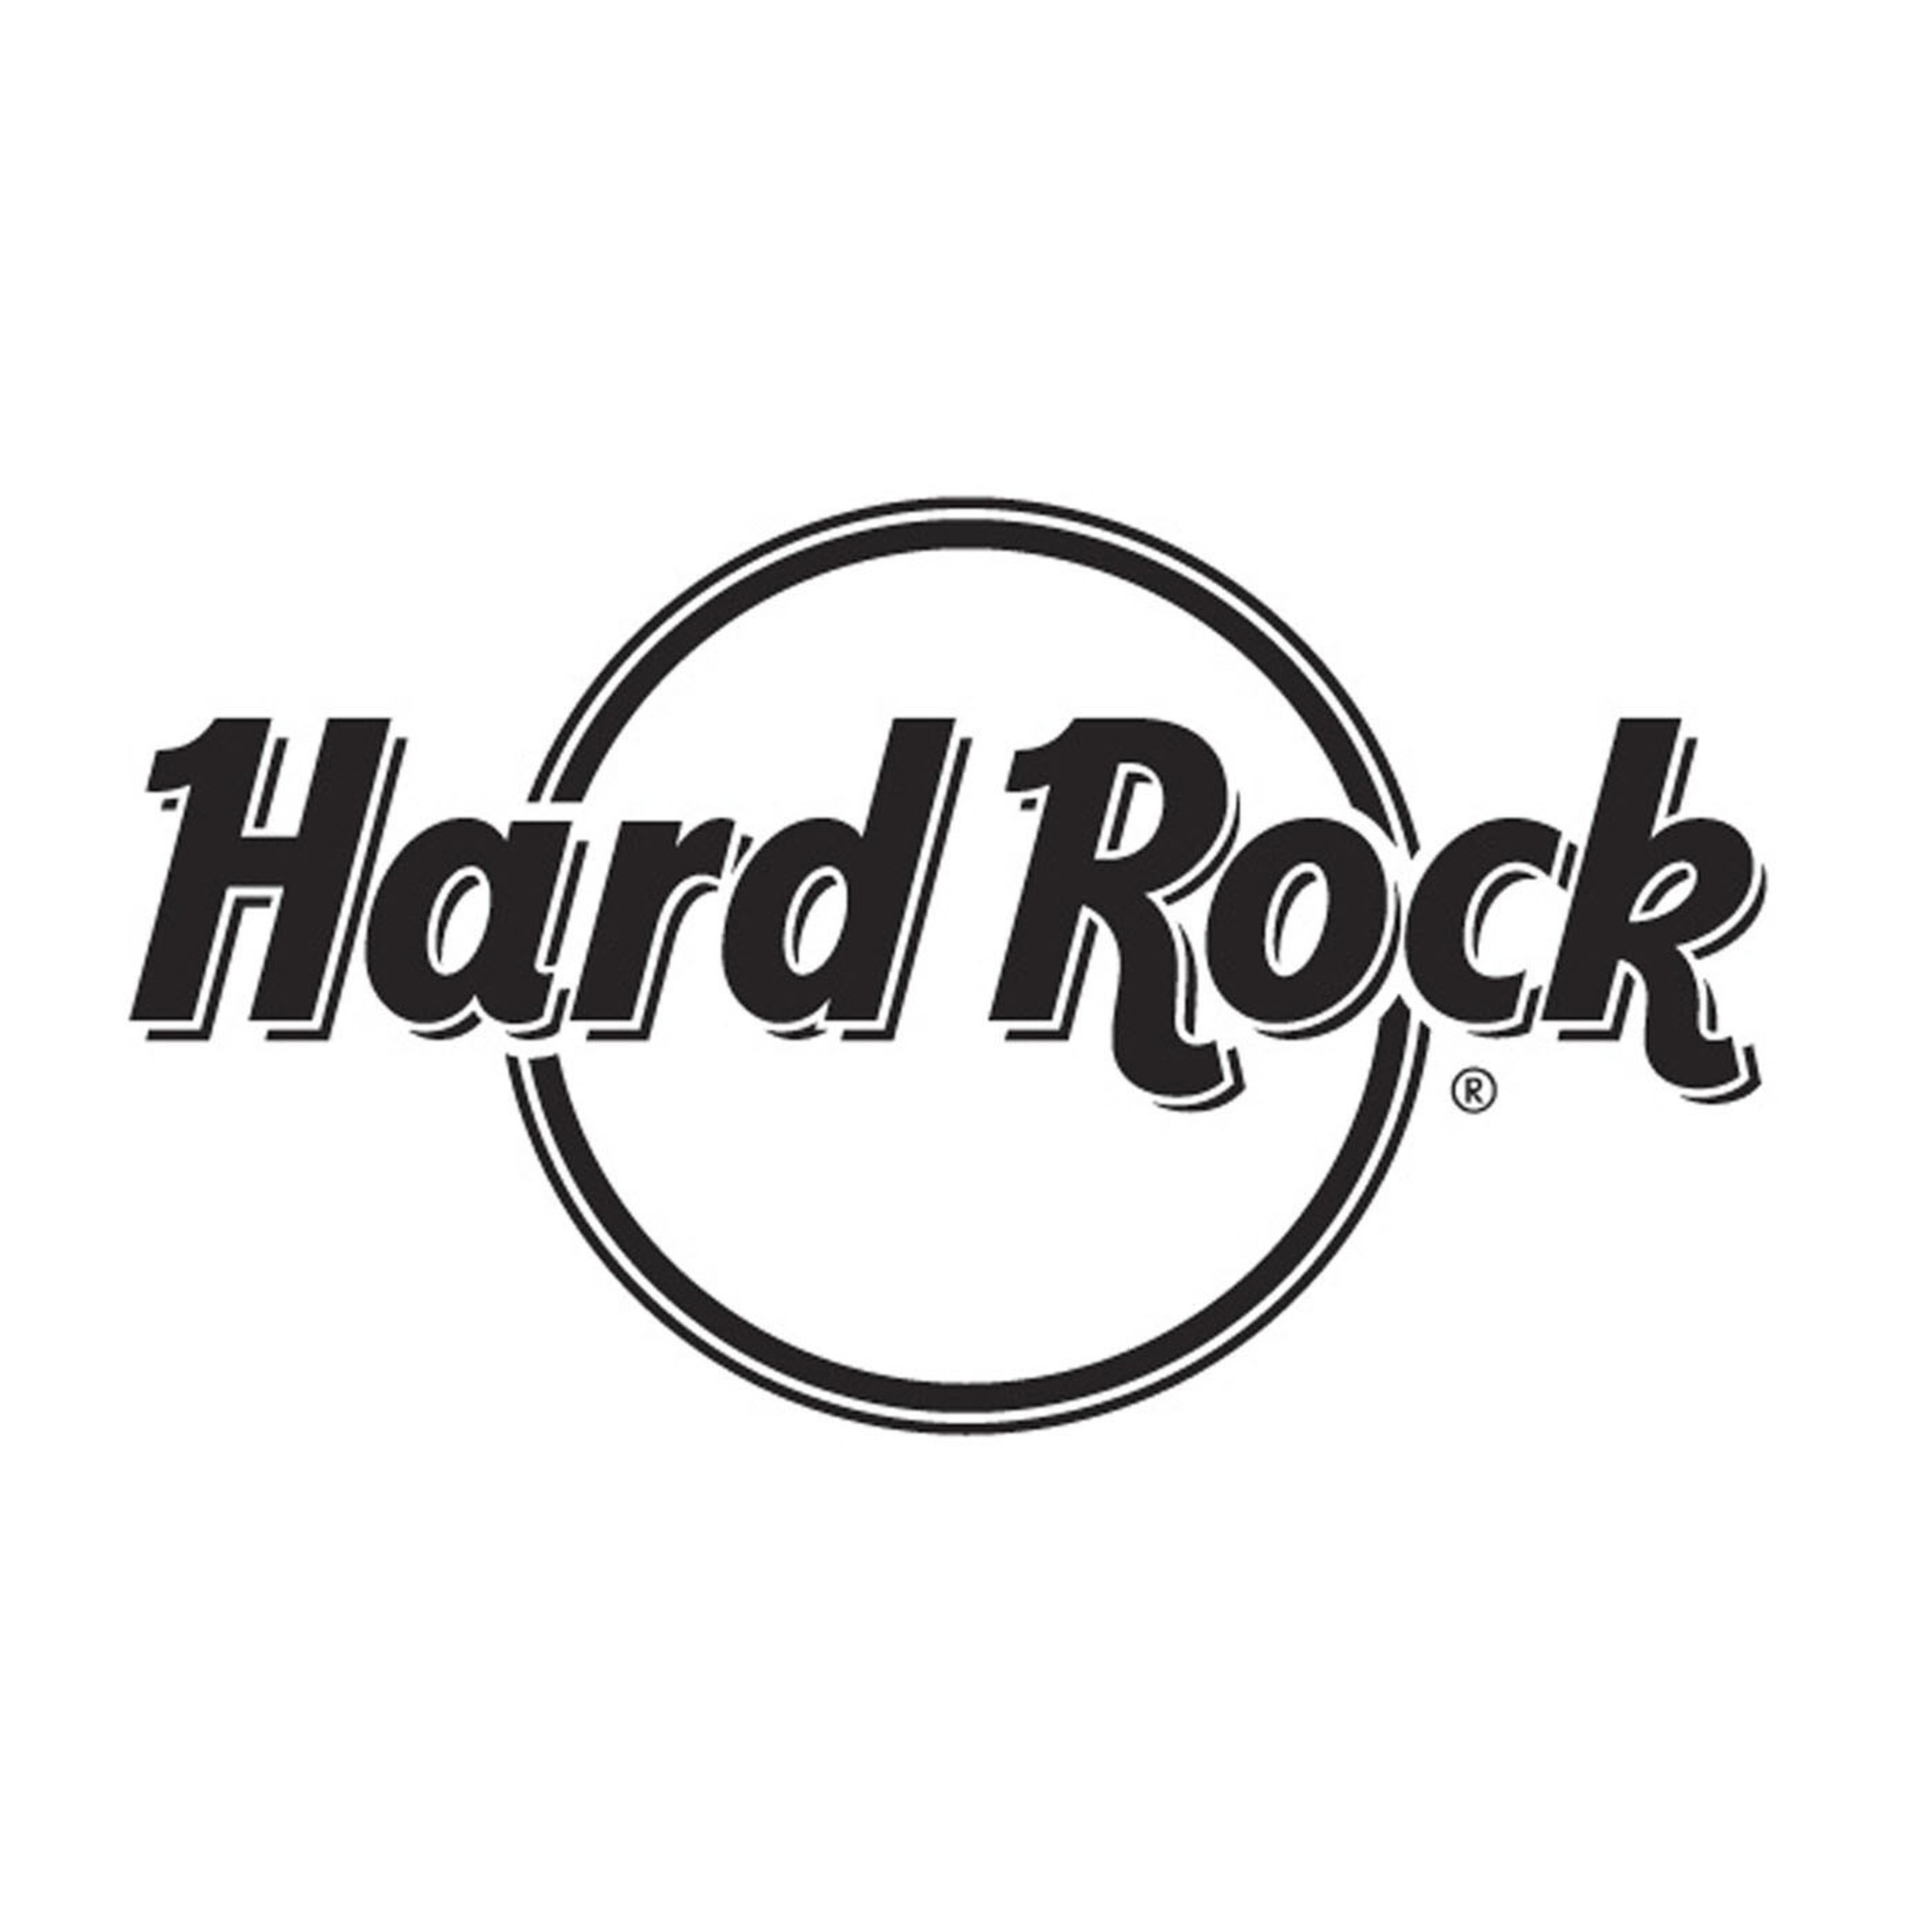 Bodom After Midnight Children of Bodom 2000 222 Virgin Radio Hard Rock 153.77 cb67fdc1-73a2-46b0-879a-baa9522eaac7